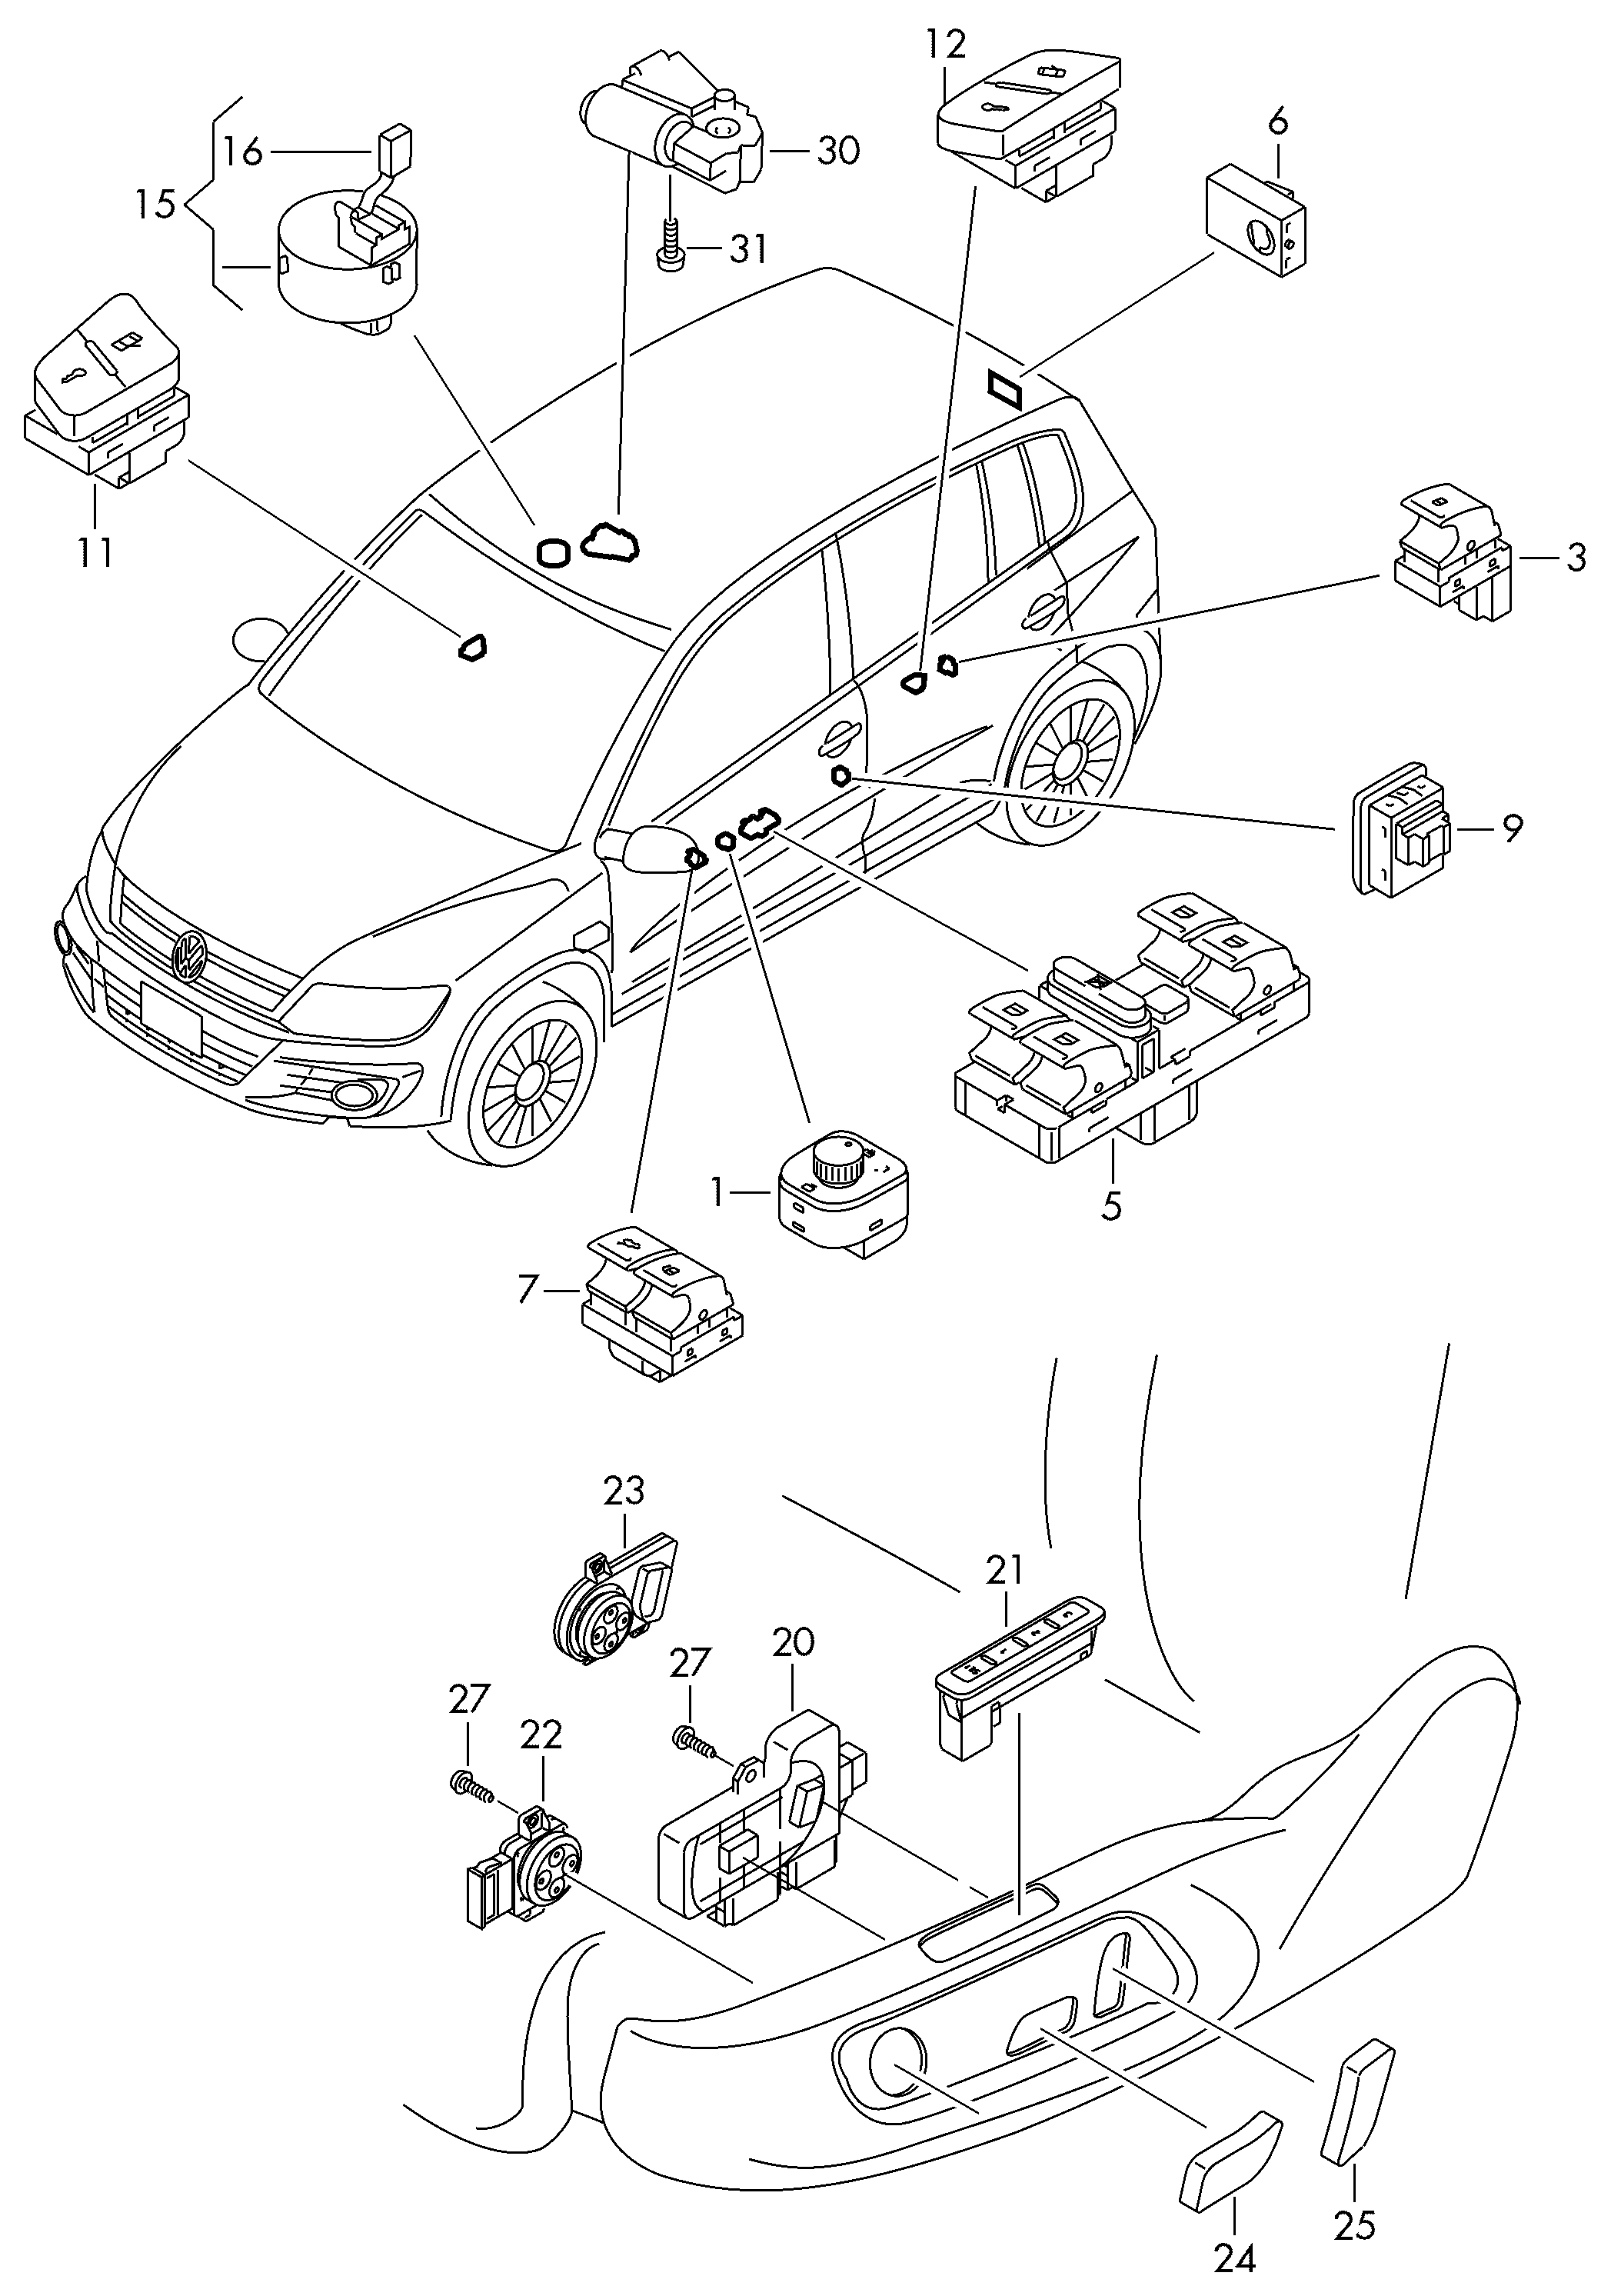 SchiebedachmotorSchalter am Dach  - Tiguan - tig